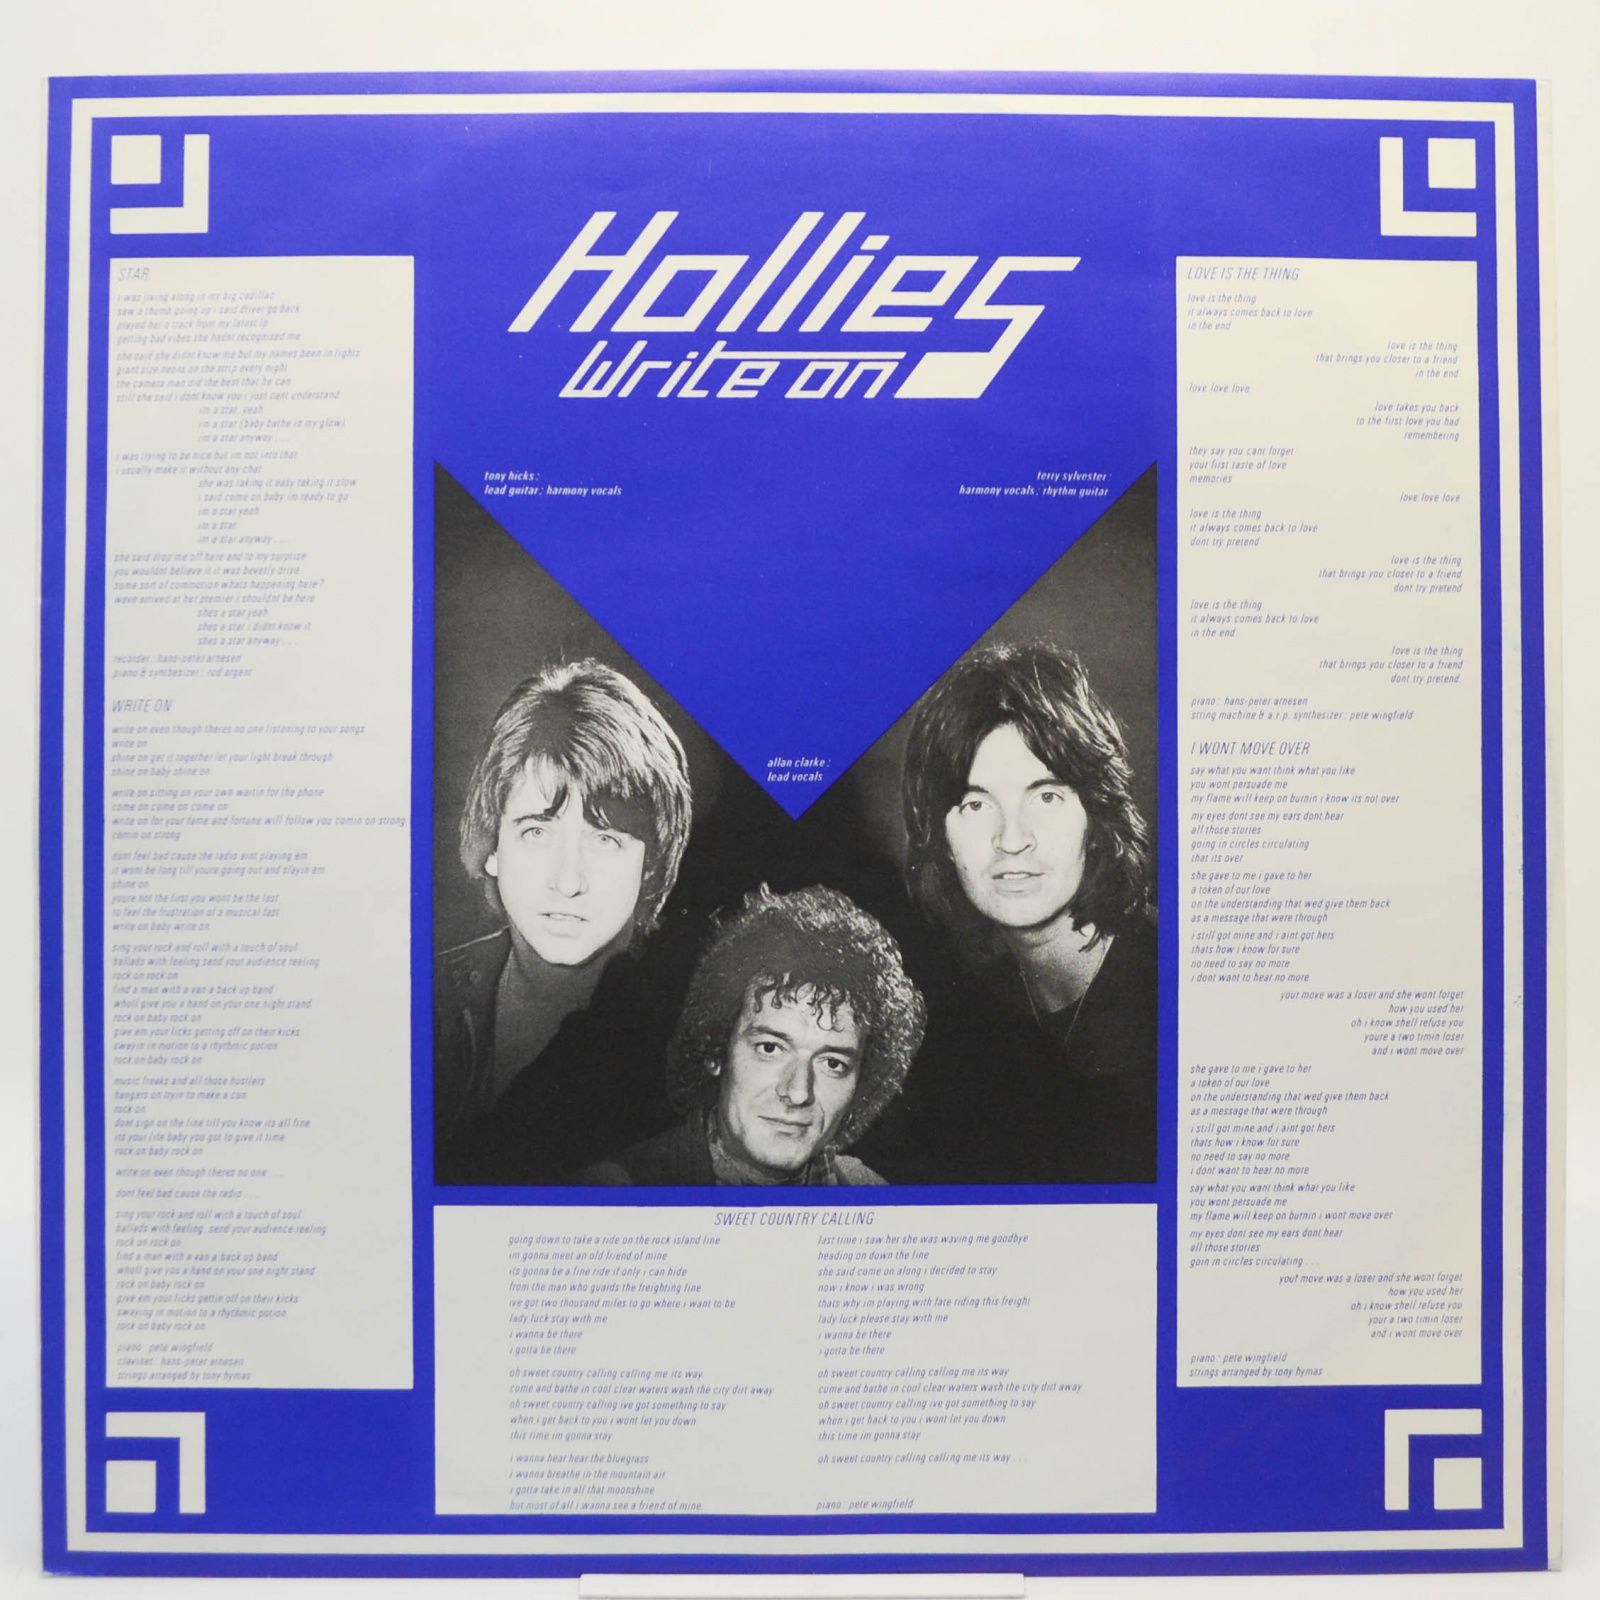 Hollies — Write On, 1975